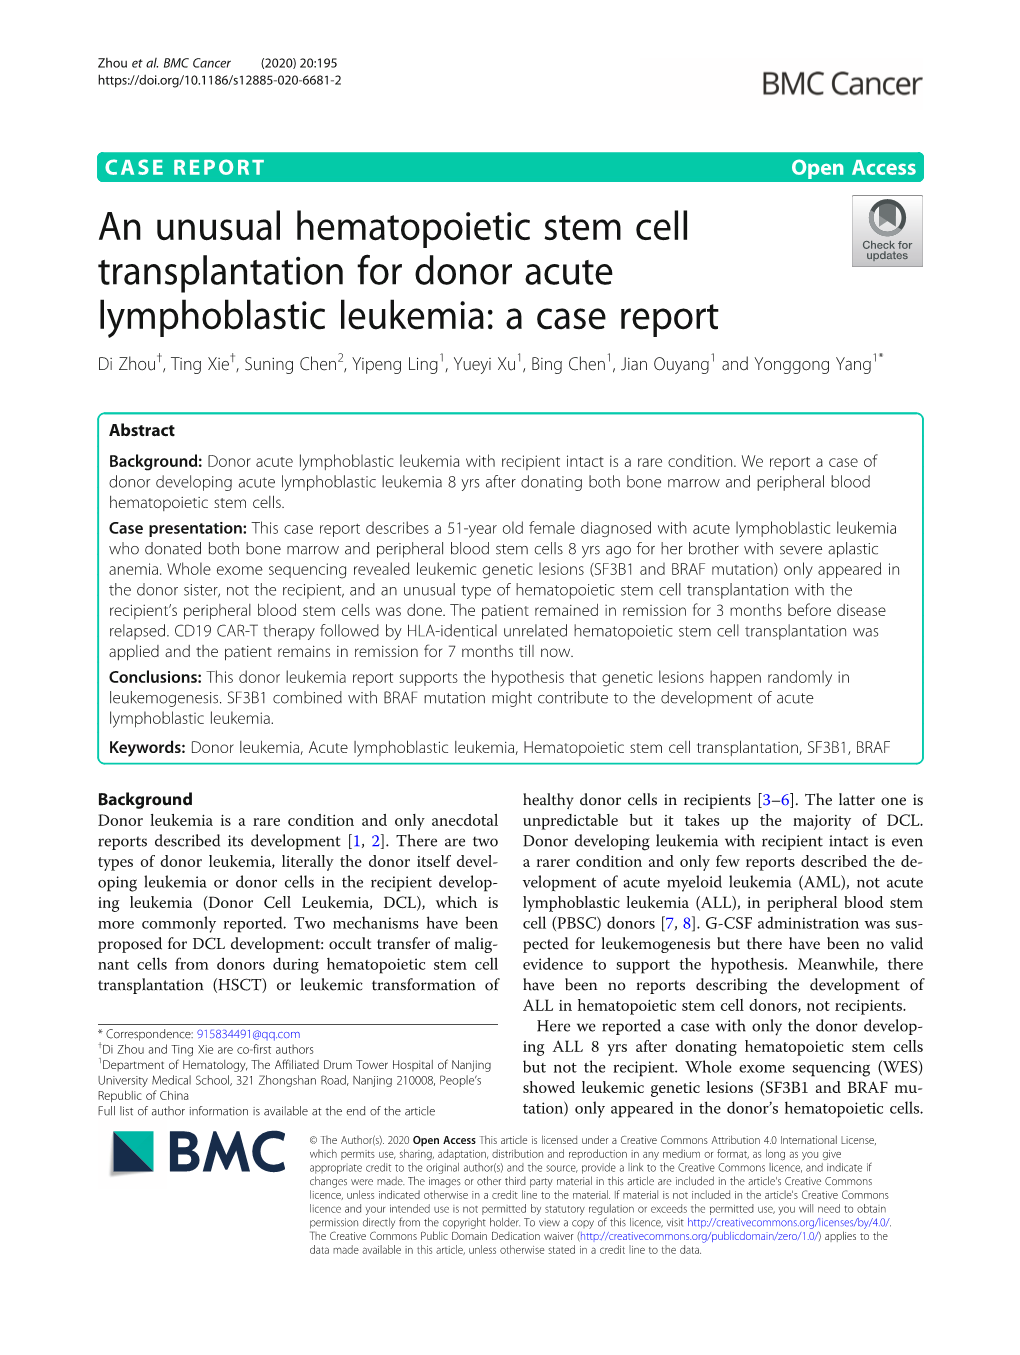 An Unusual Hematopoietic Stem Cell Transplantation for Donor Acute Lymphoblastic Leukemia: a Case Report